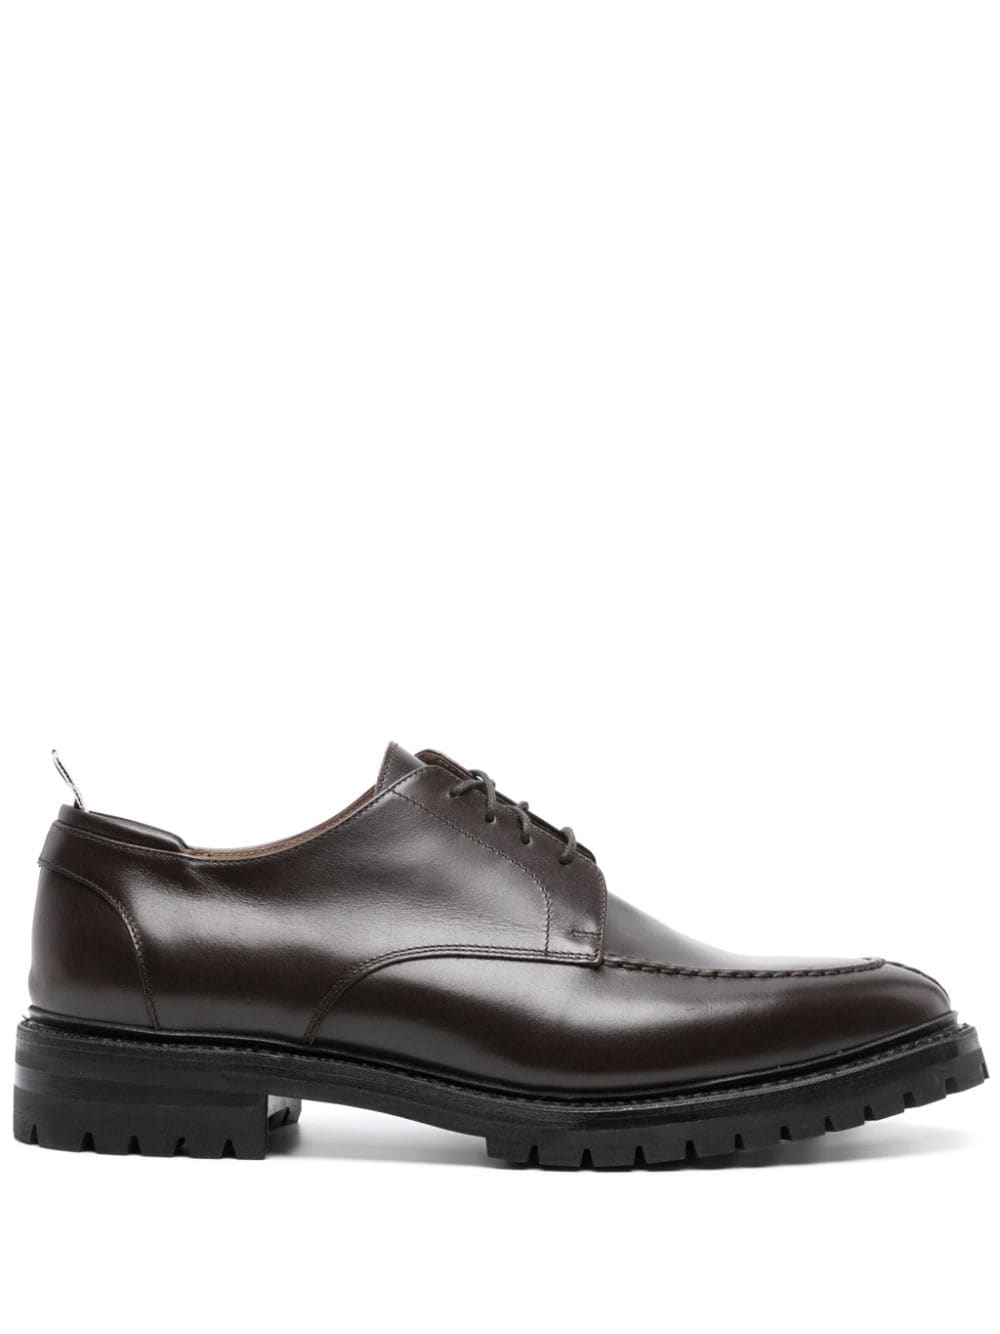 Thom Browne leather derby shoes von Thom Browne